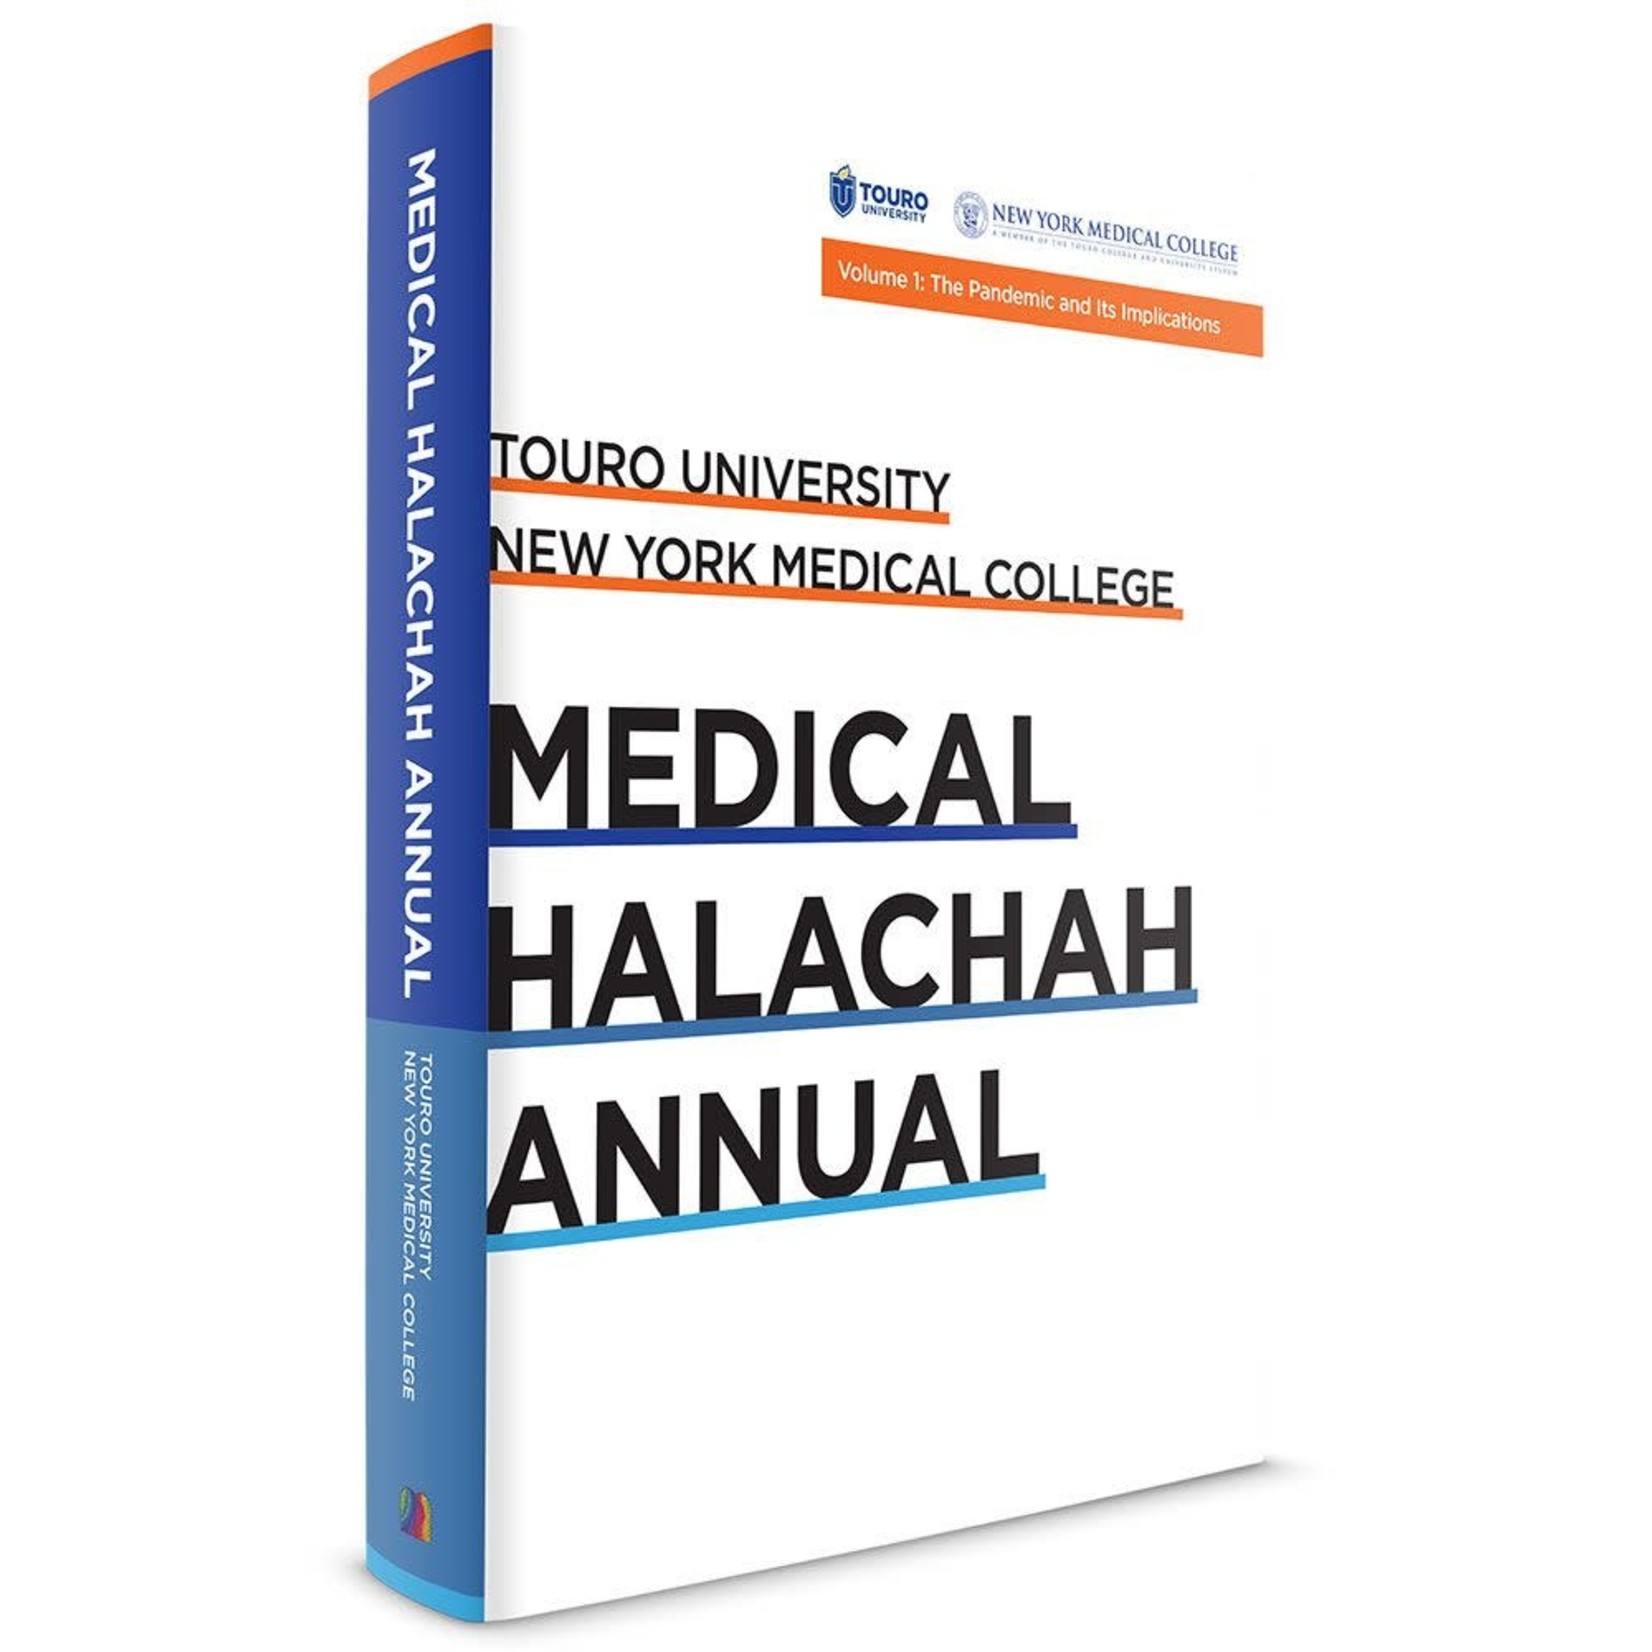 Touro University: Medical Halachah Annual - Volume 1